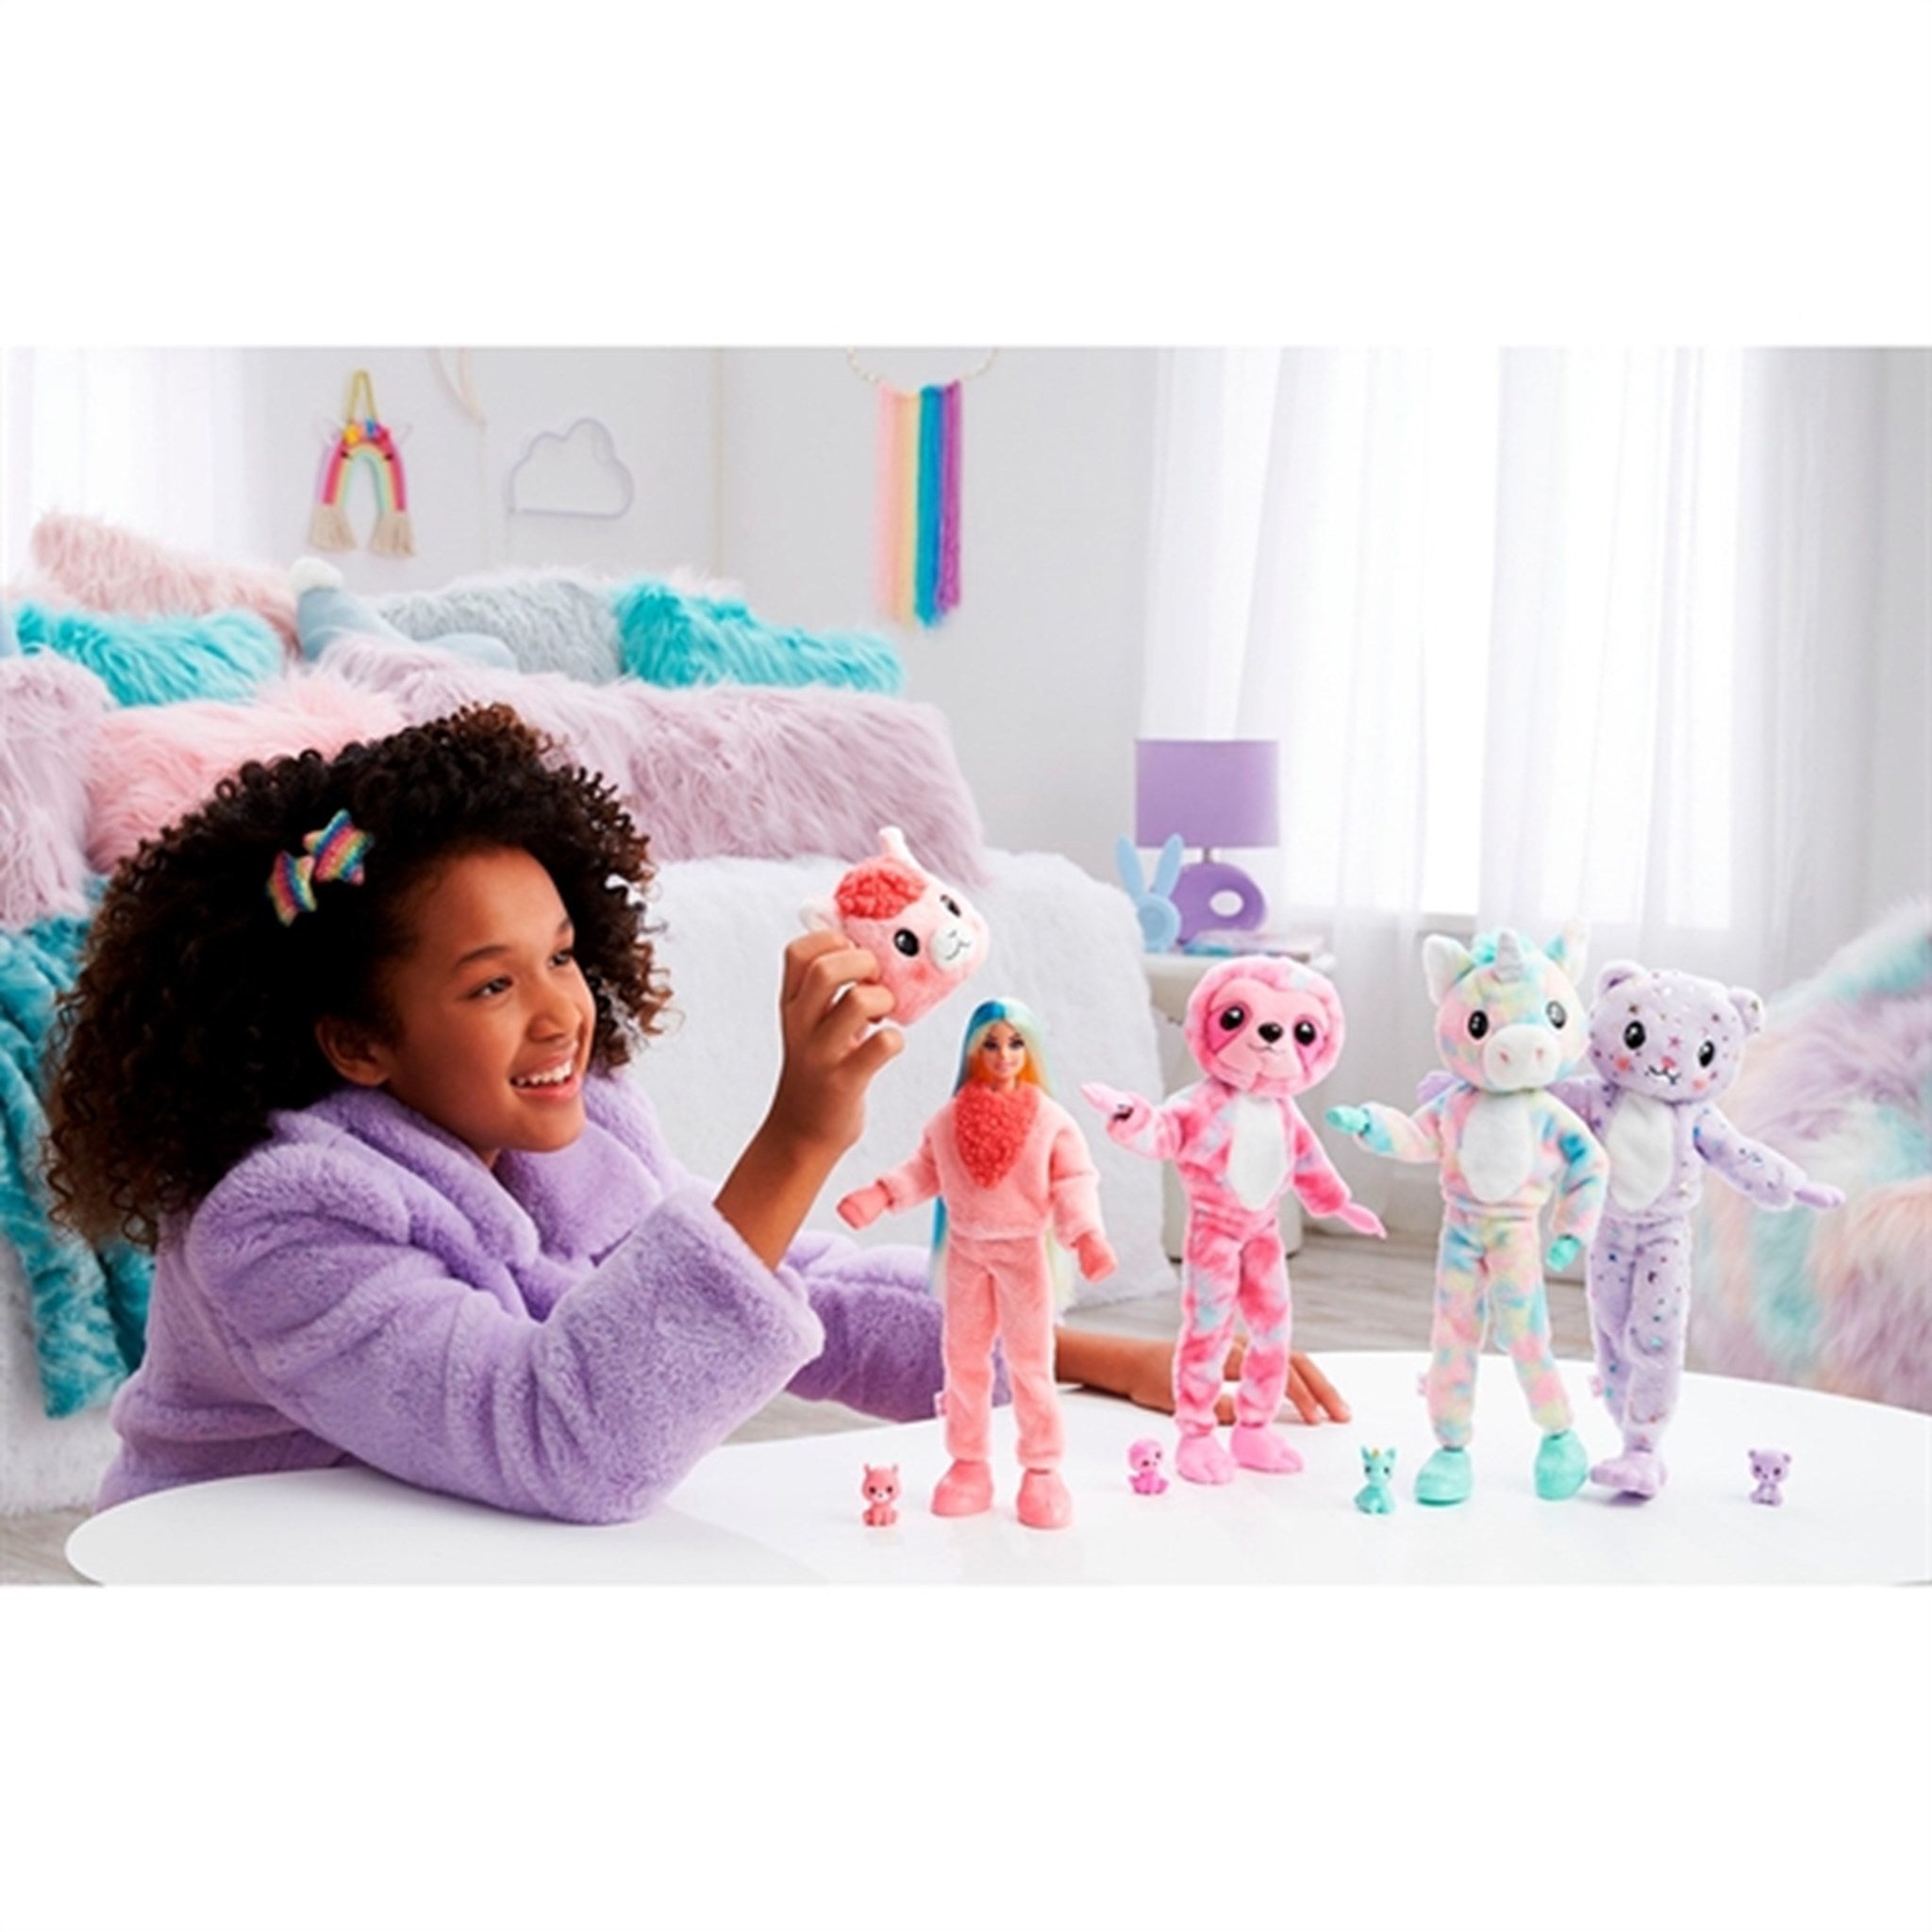 Barbie® Cutie Reveal Dreamland Fantasy - Llama 2